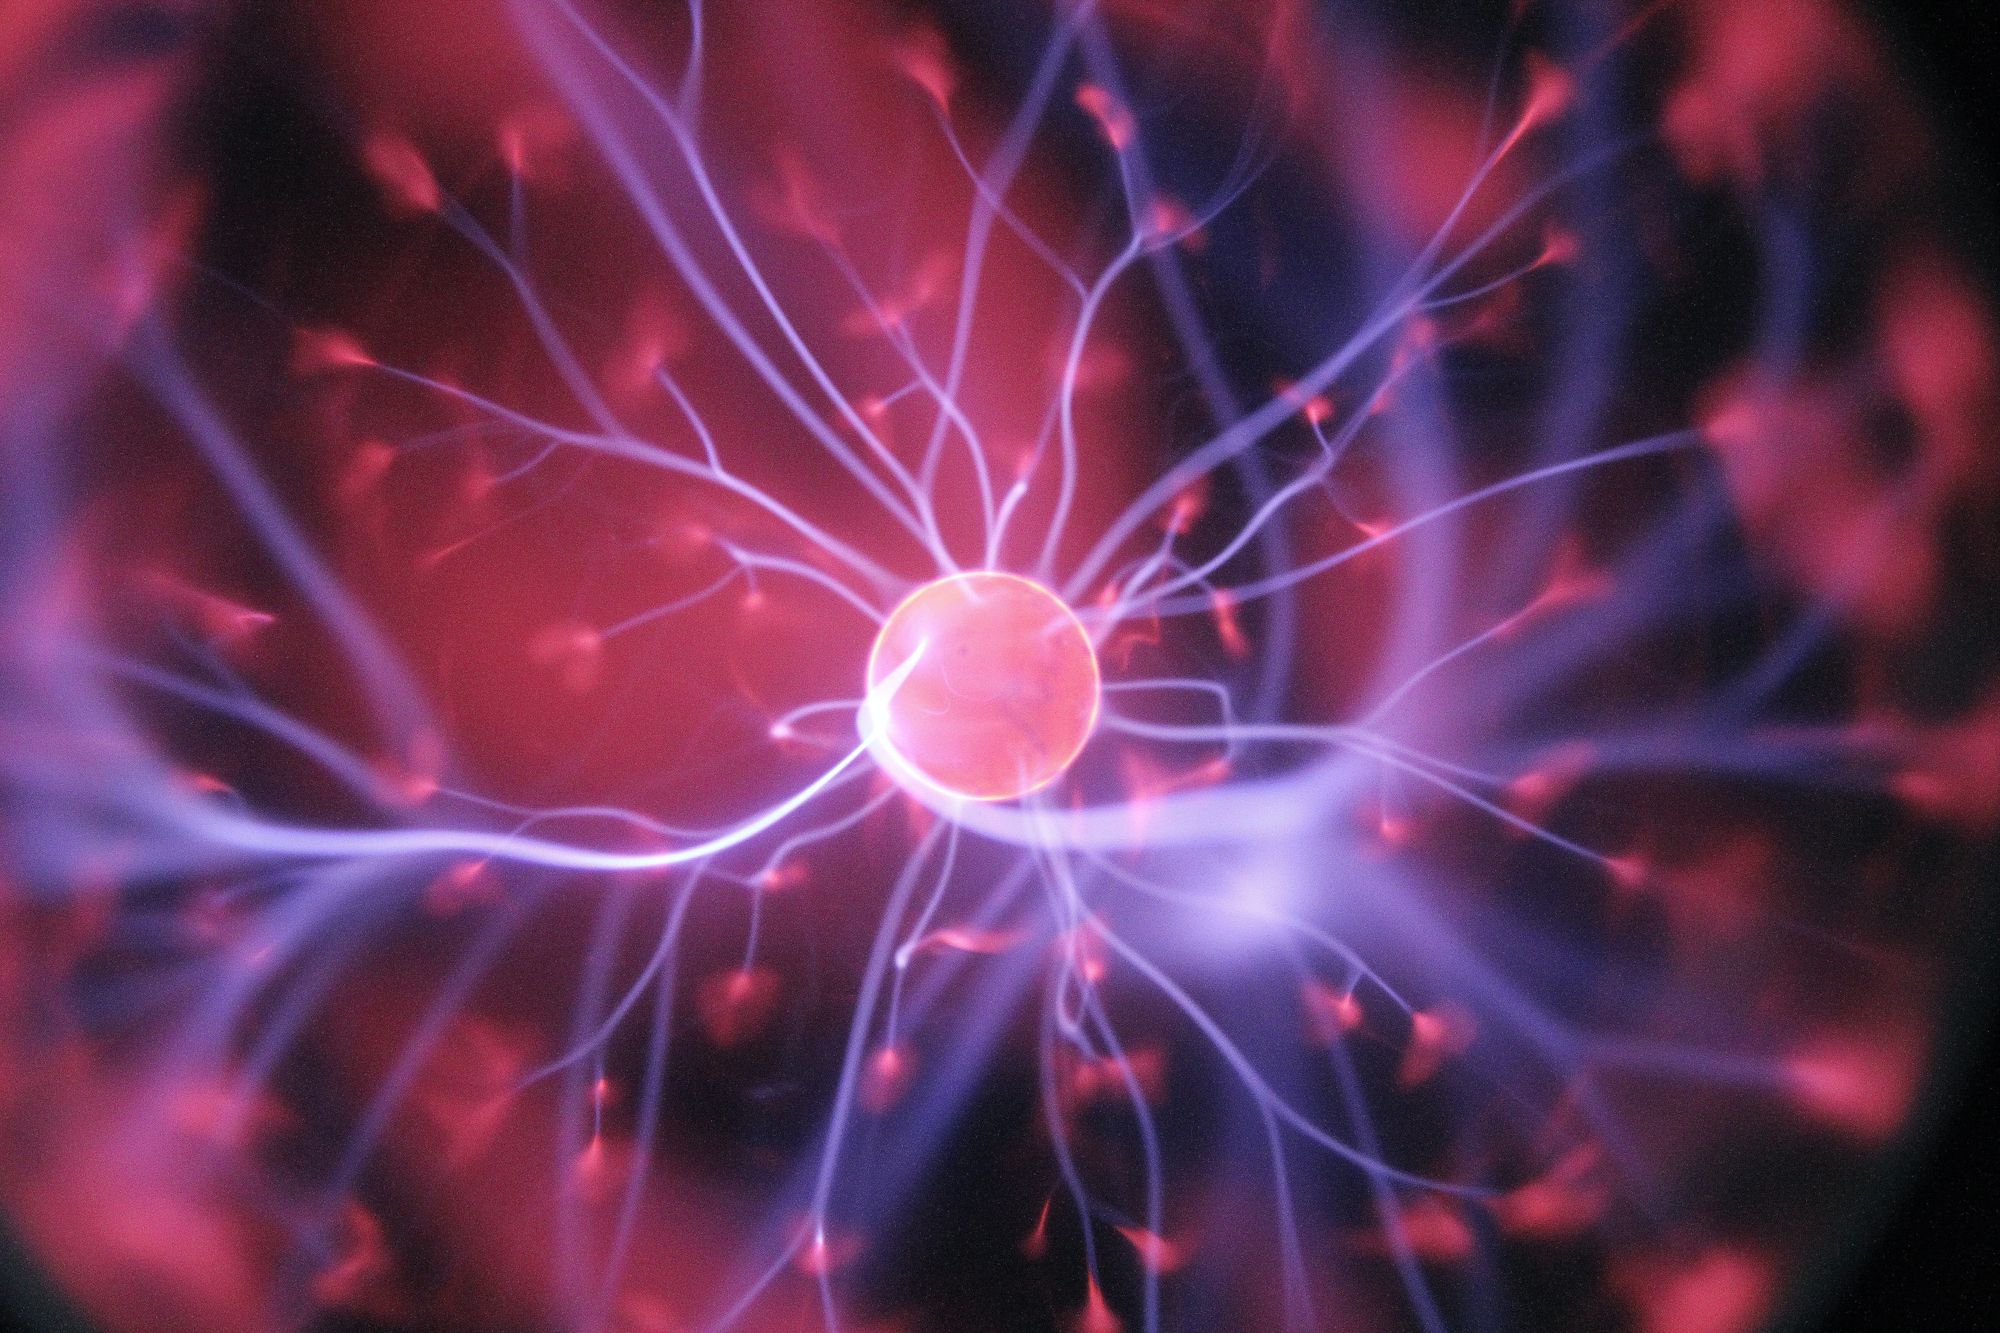 Electrical impulses in brain neurones.